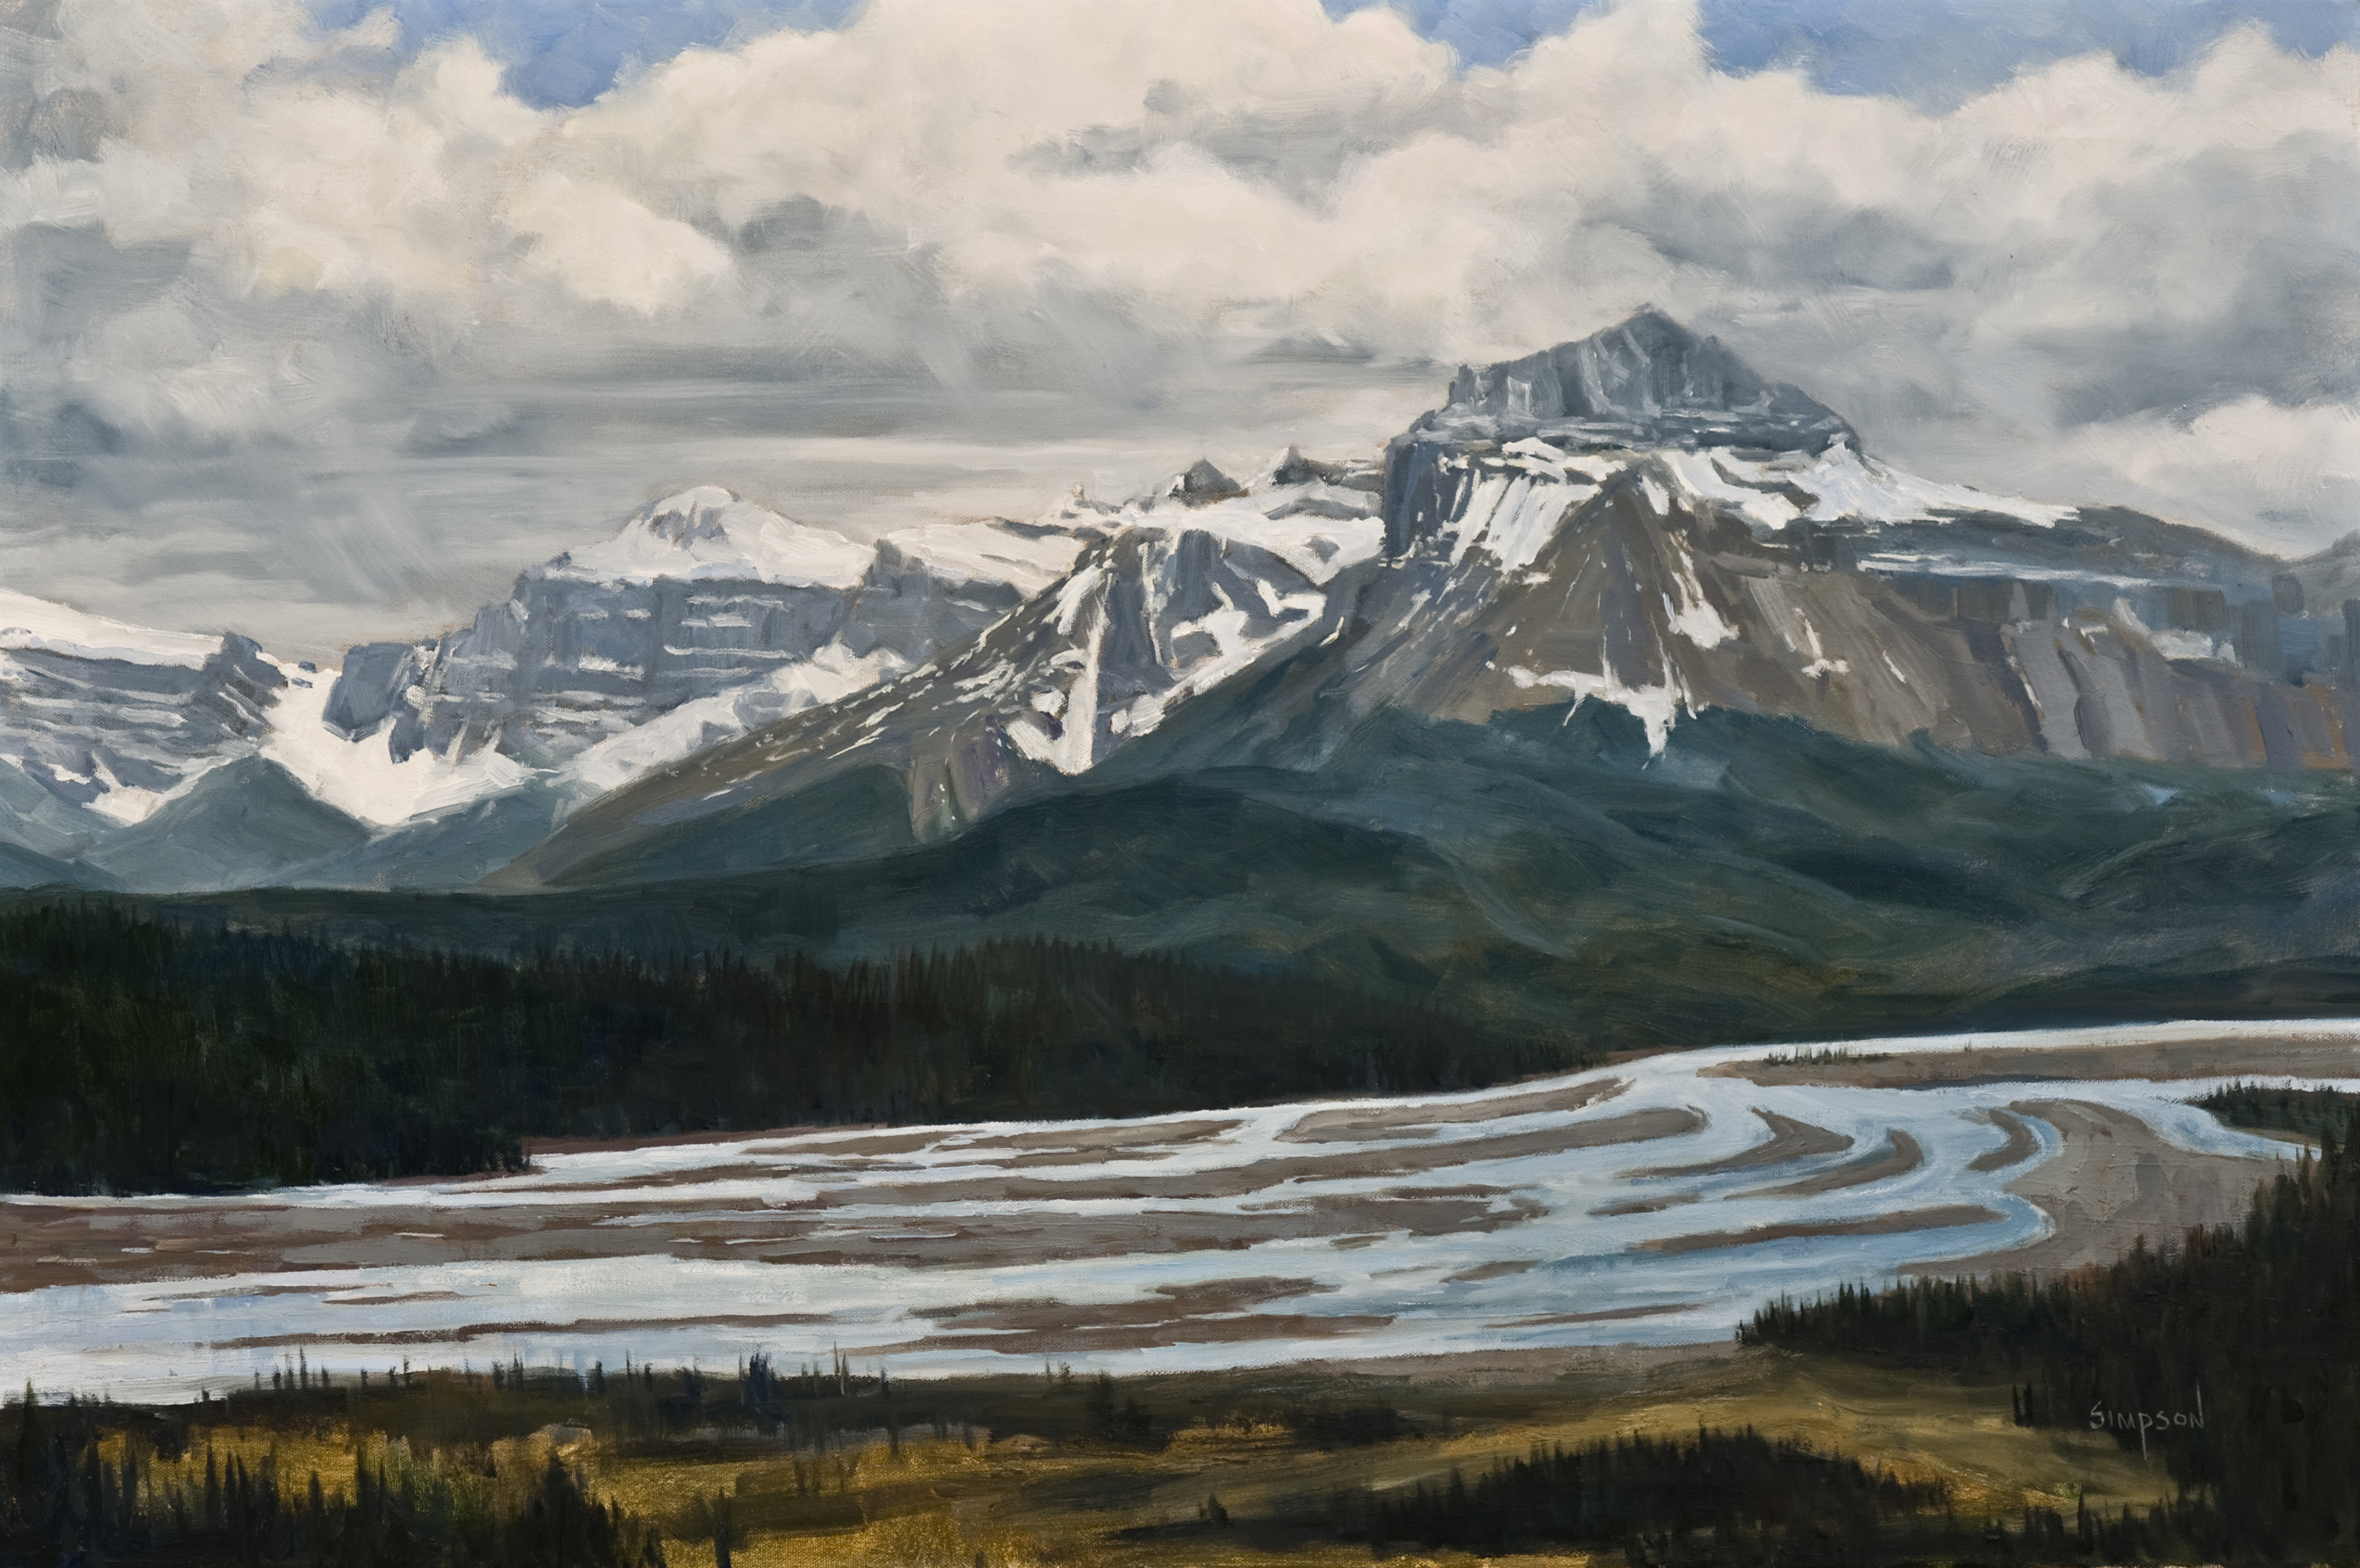 Oil painting by Artist on a Harley Mike Simpson of the North Saskatchewan River near Saskatchewan